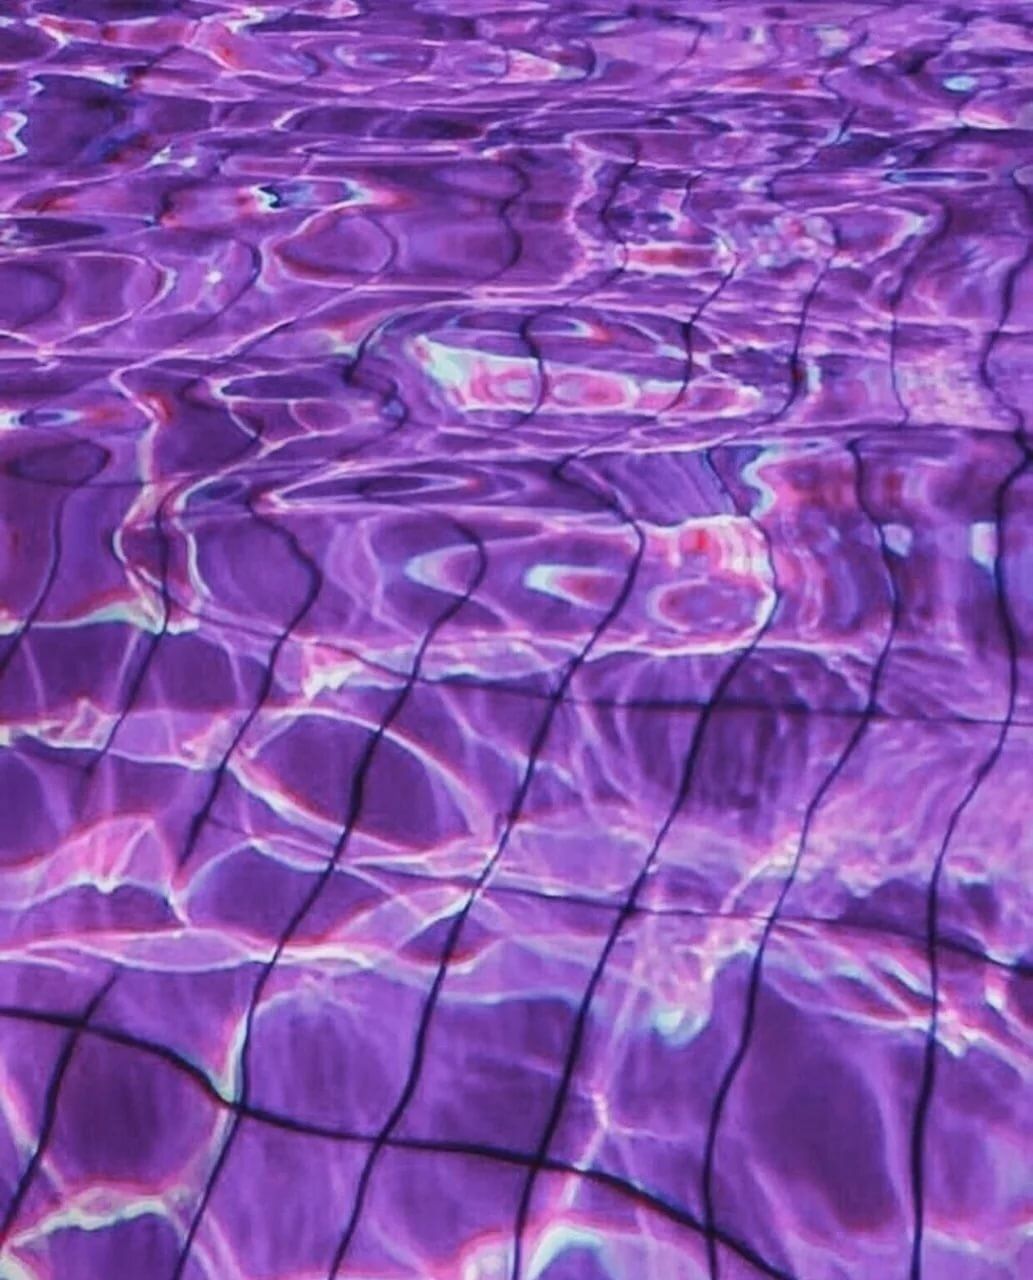 Water aesthetic Wallpaper Download